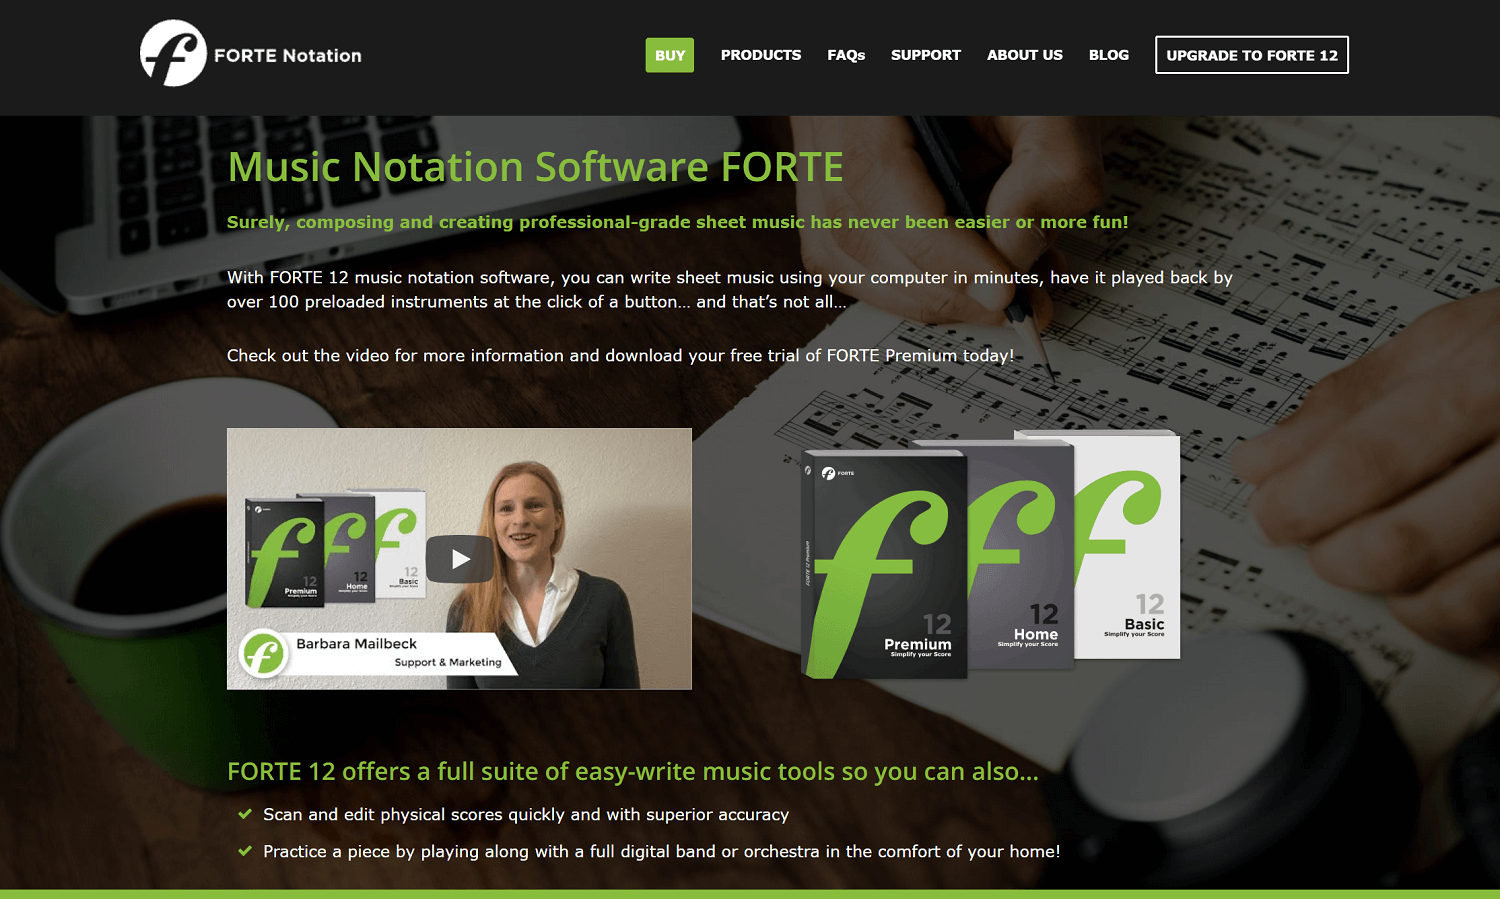 FORTE website homepage screenshot